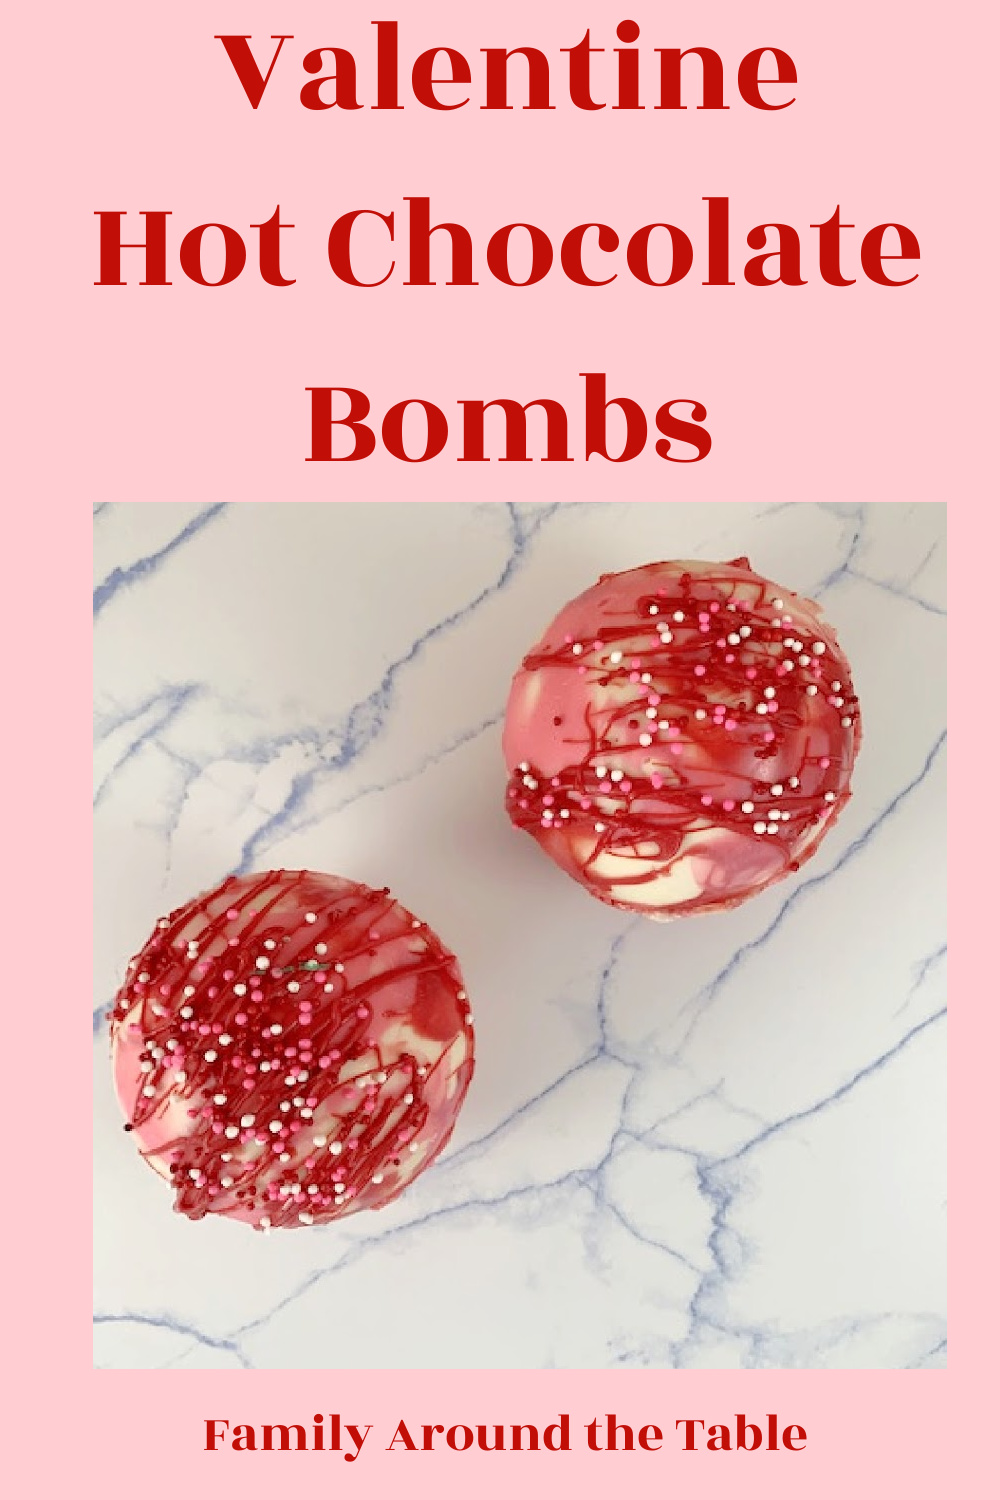 Valentine Hot Chocolate Bombs Pinterest image.